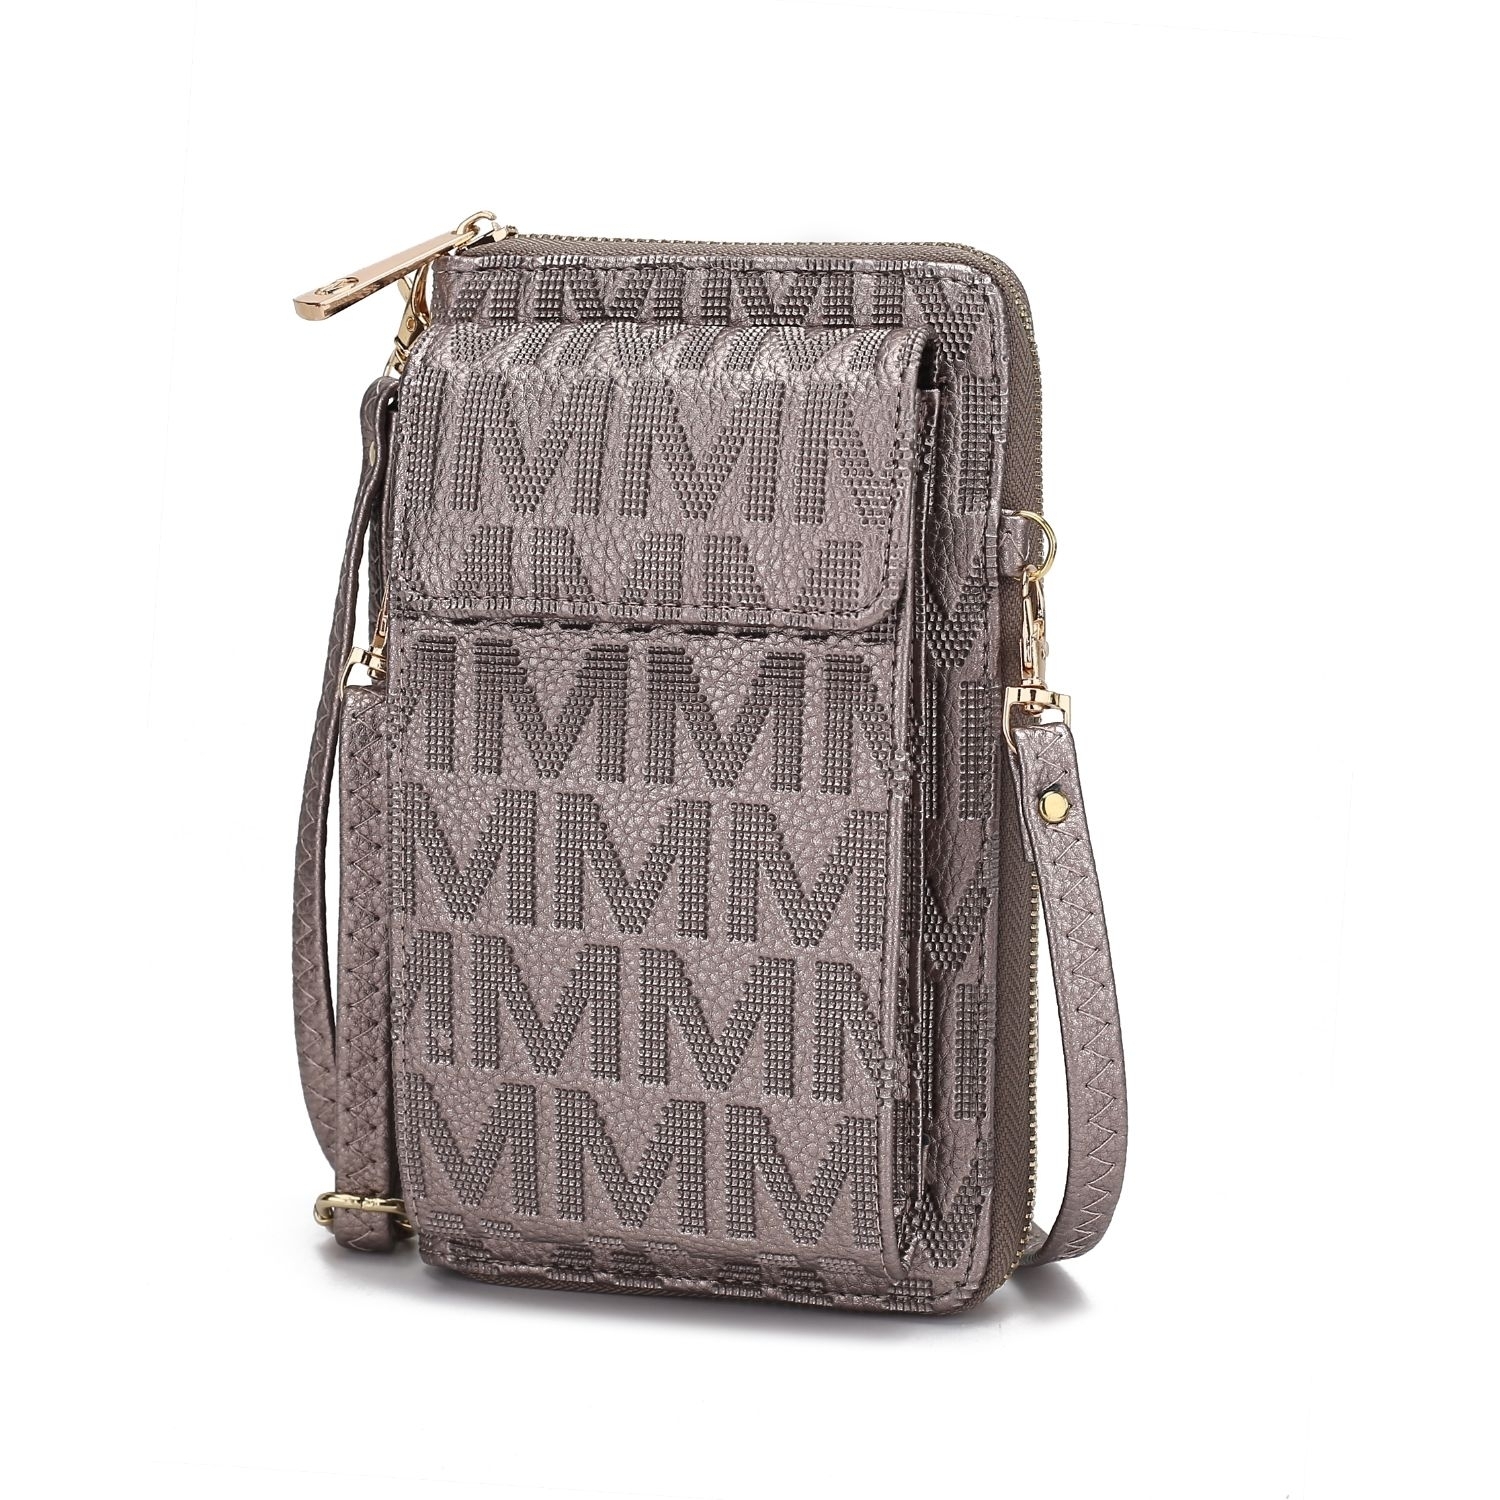 MKF Collection Caddy Phone Wallet Crossbody Handbag By Mia K - Pewter